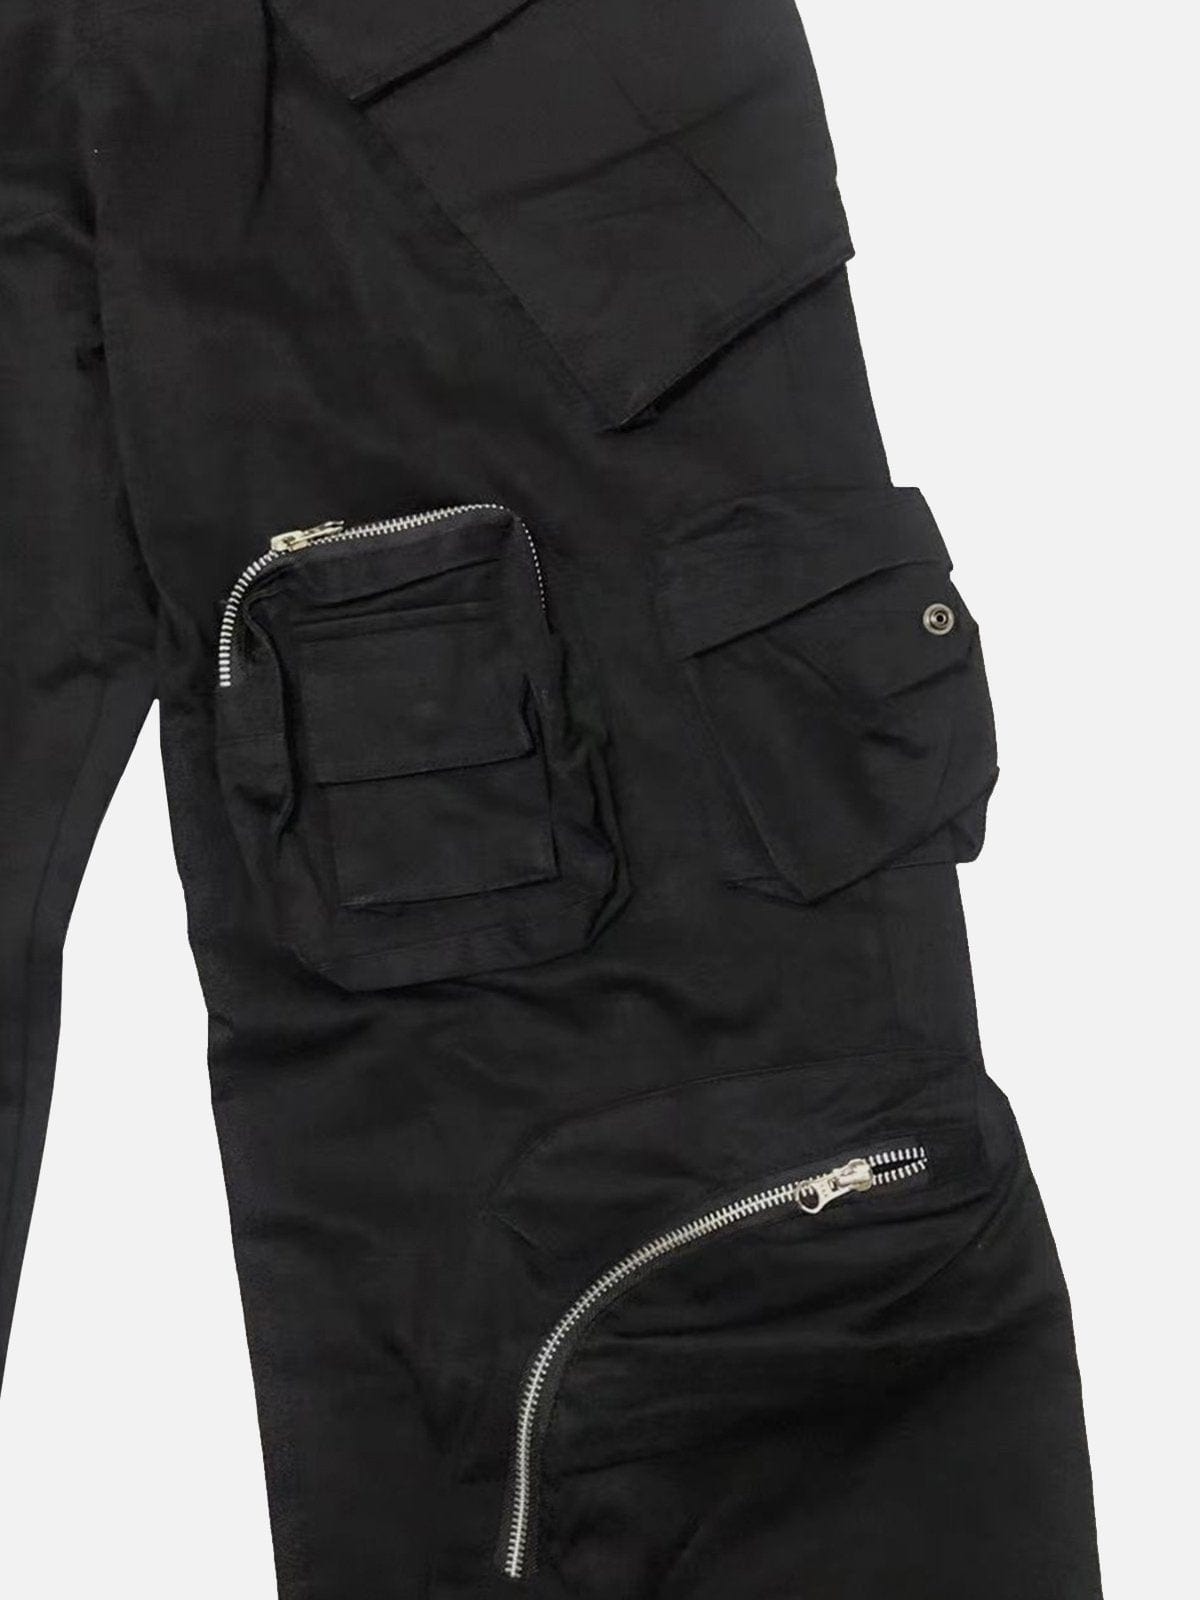 NEV Functional Multi-Pocket Zipper Pants